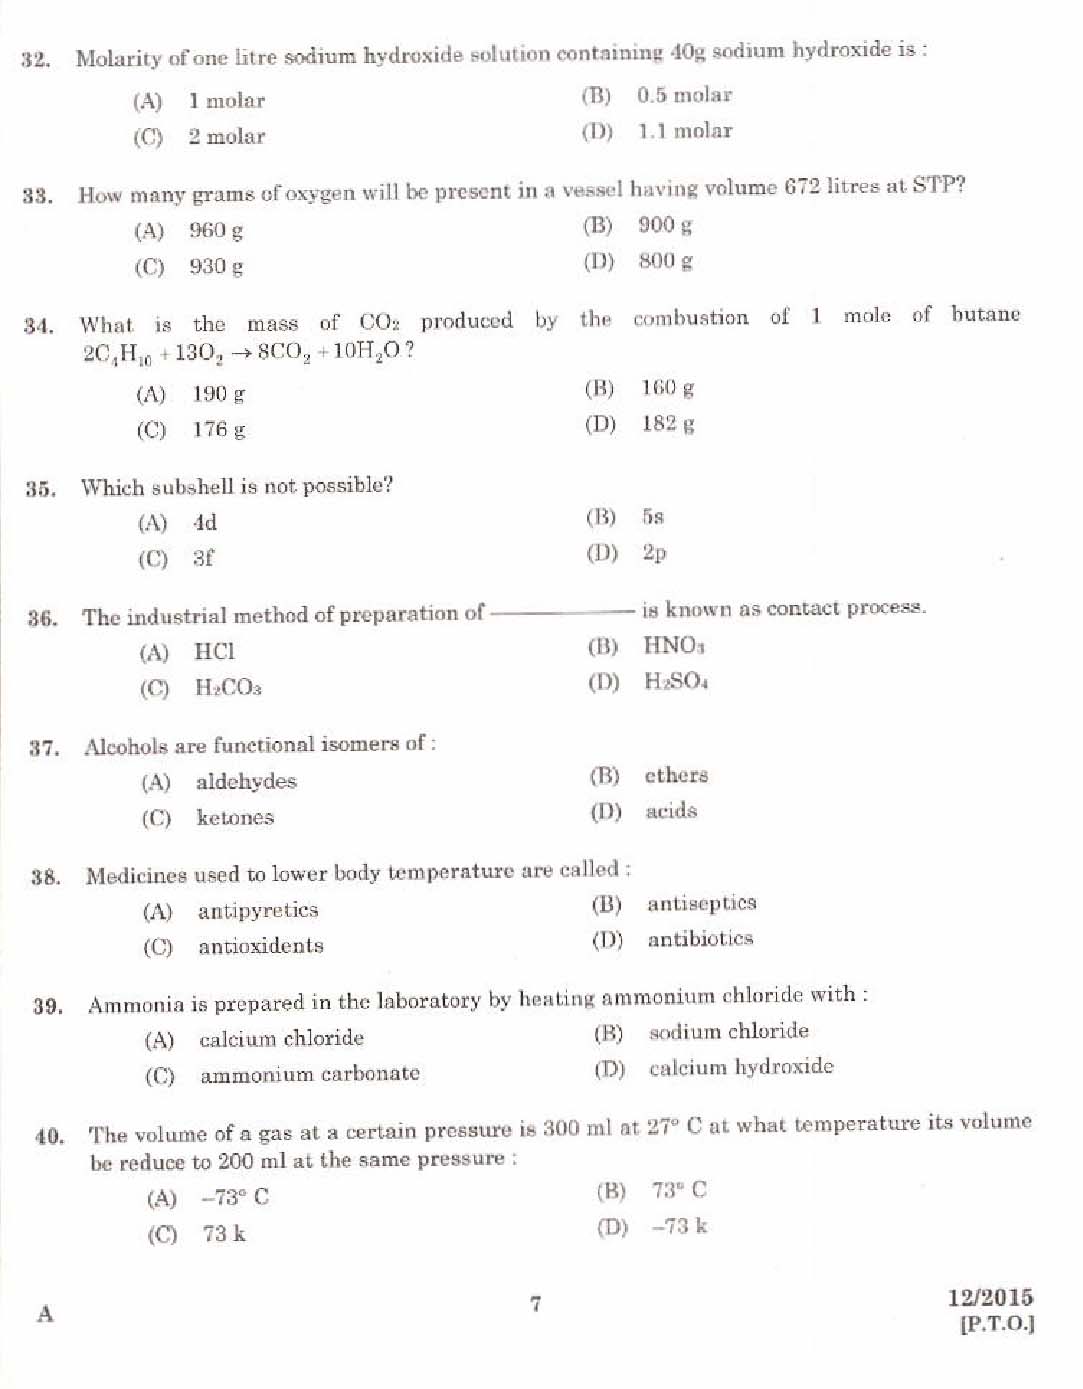 Kerala PSC Laboratory Assistant Exam 2015 Question Paper Code 122015 5